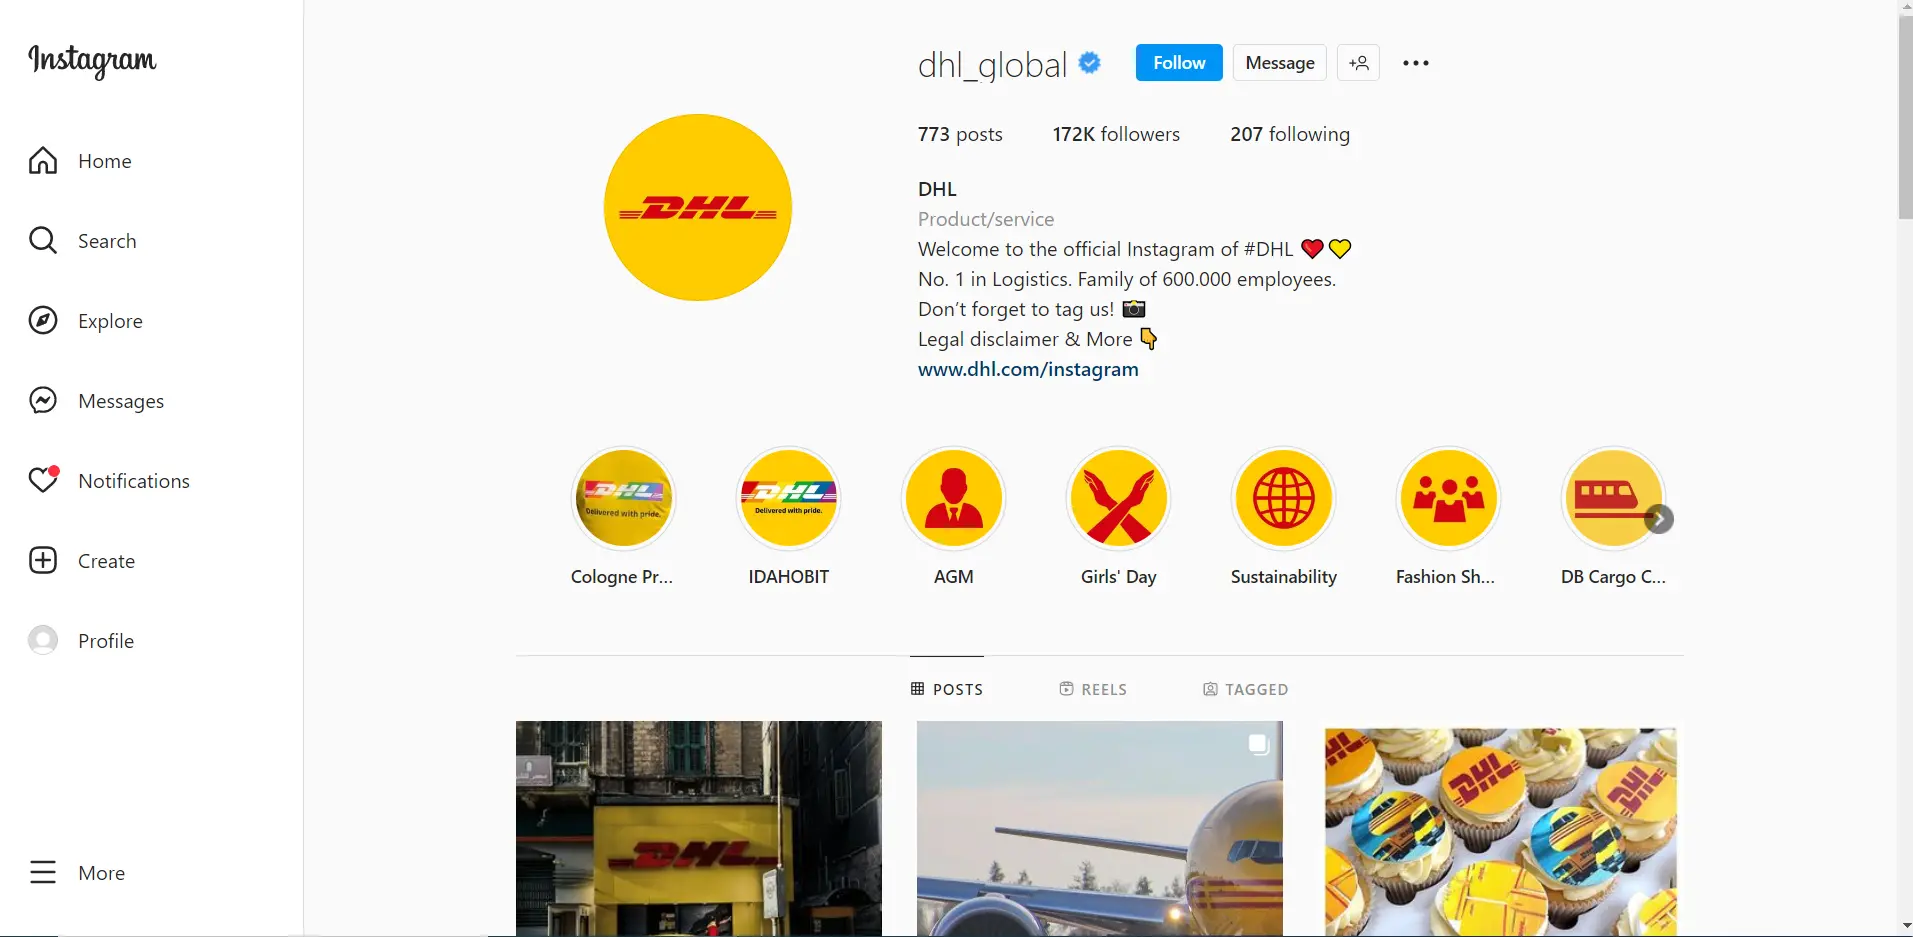 DHL global Instagram page